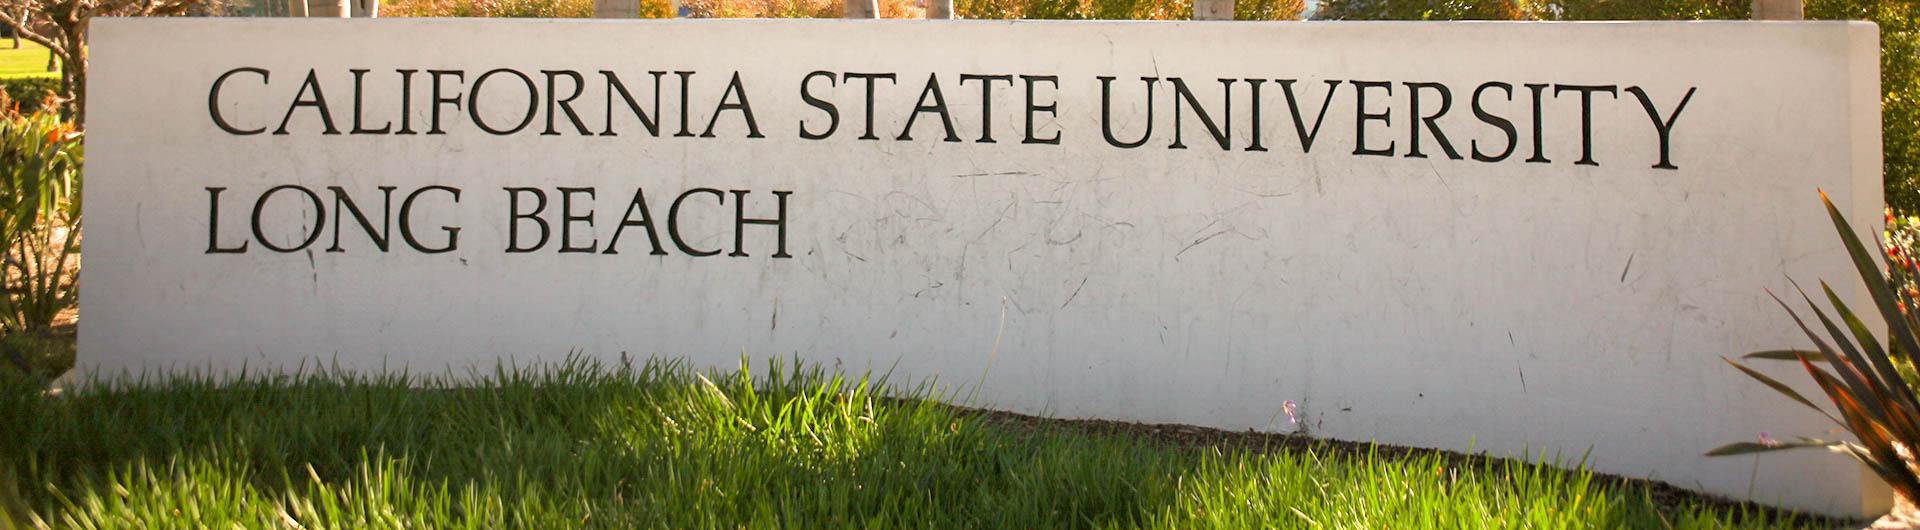 California State University, Long Beach Big Sign